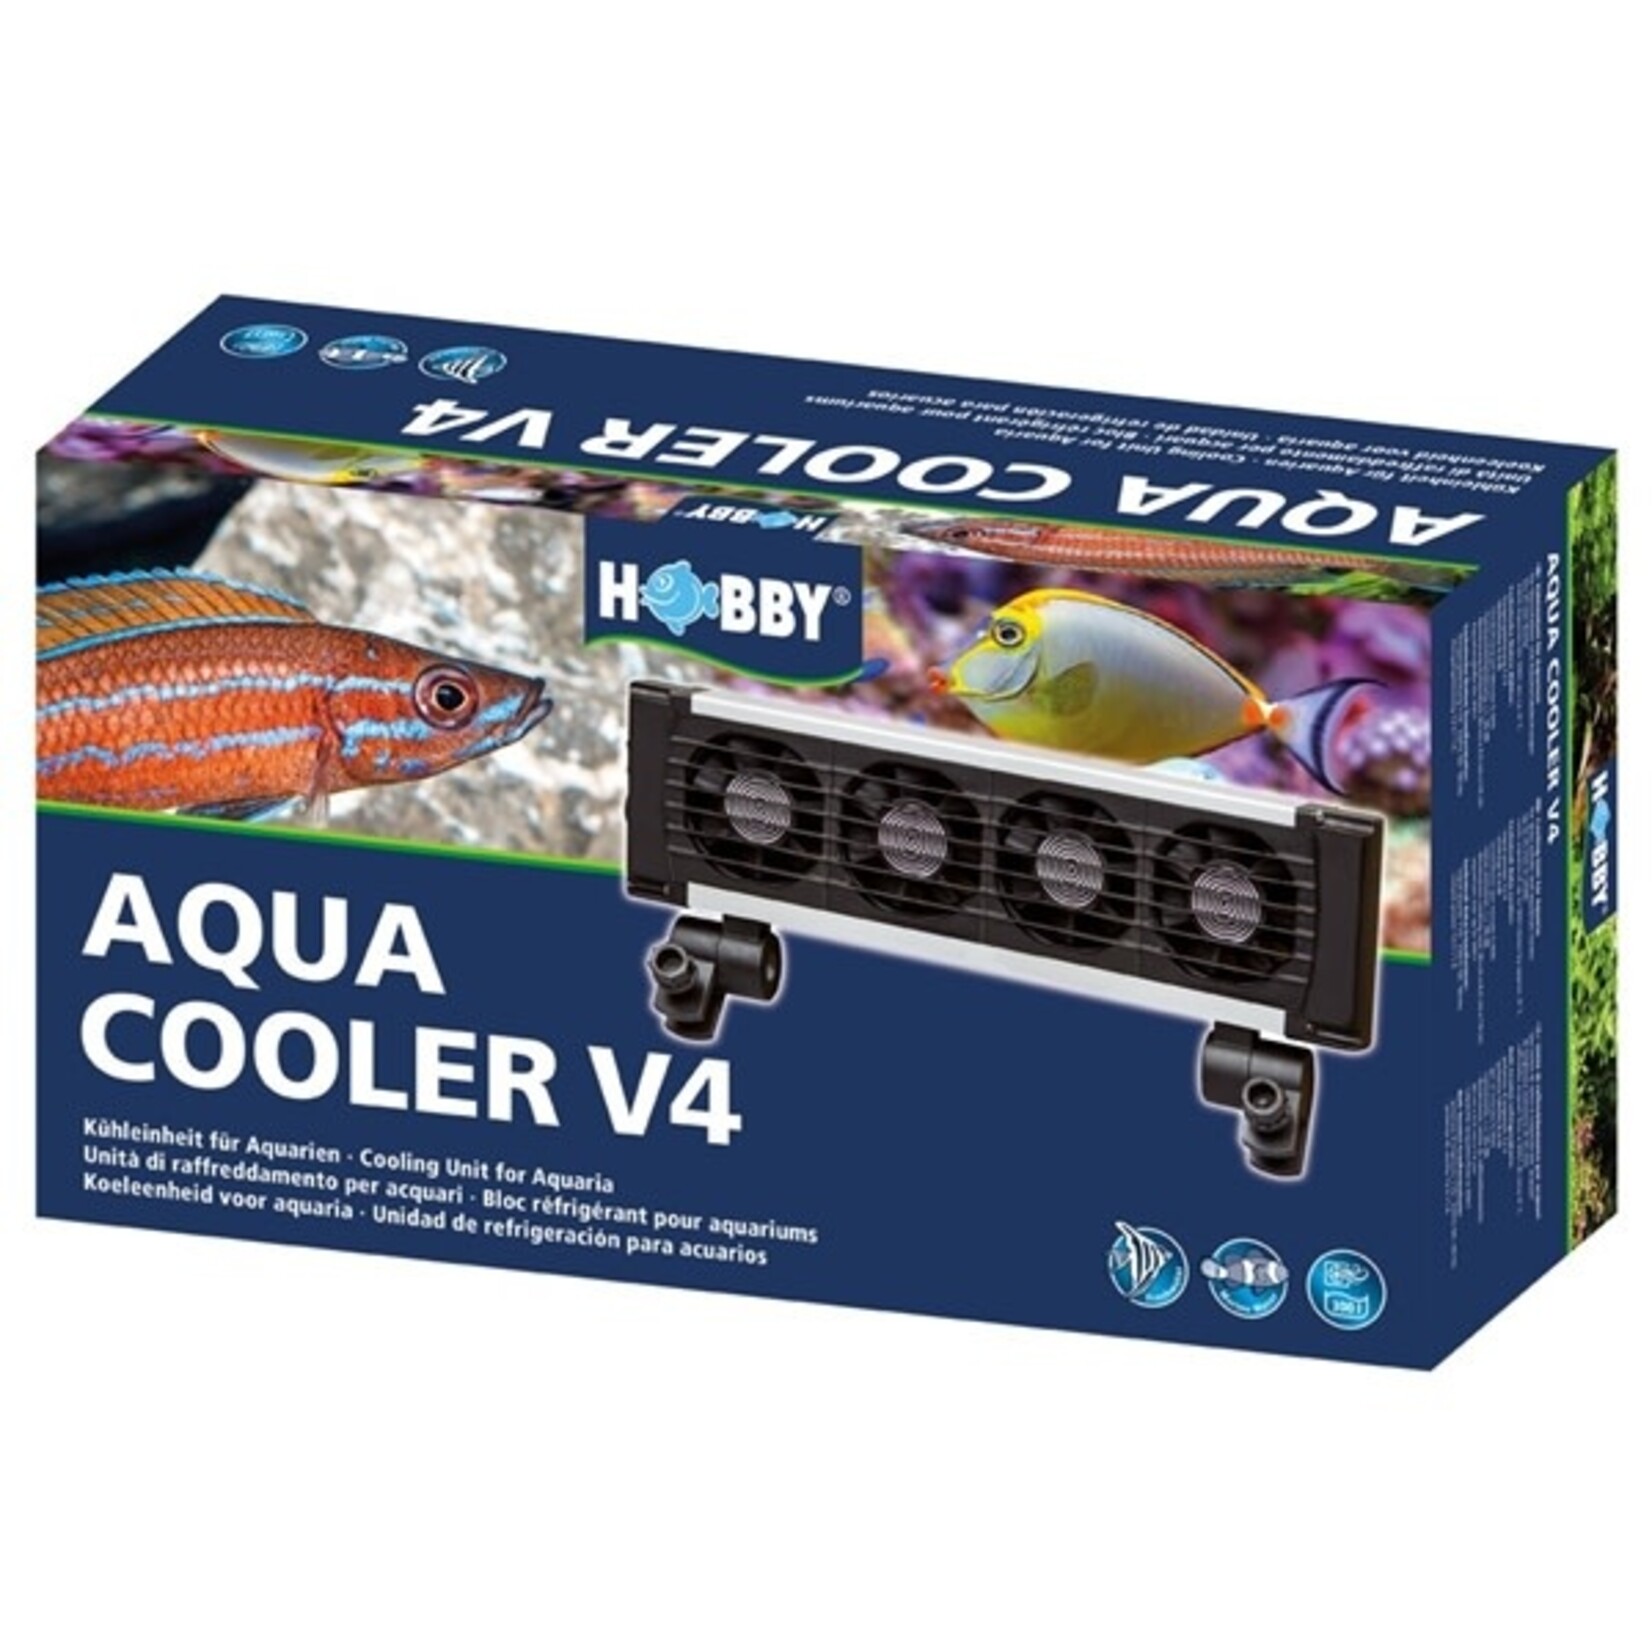 Hobby Aqua cooler 4 fans v4